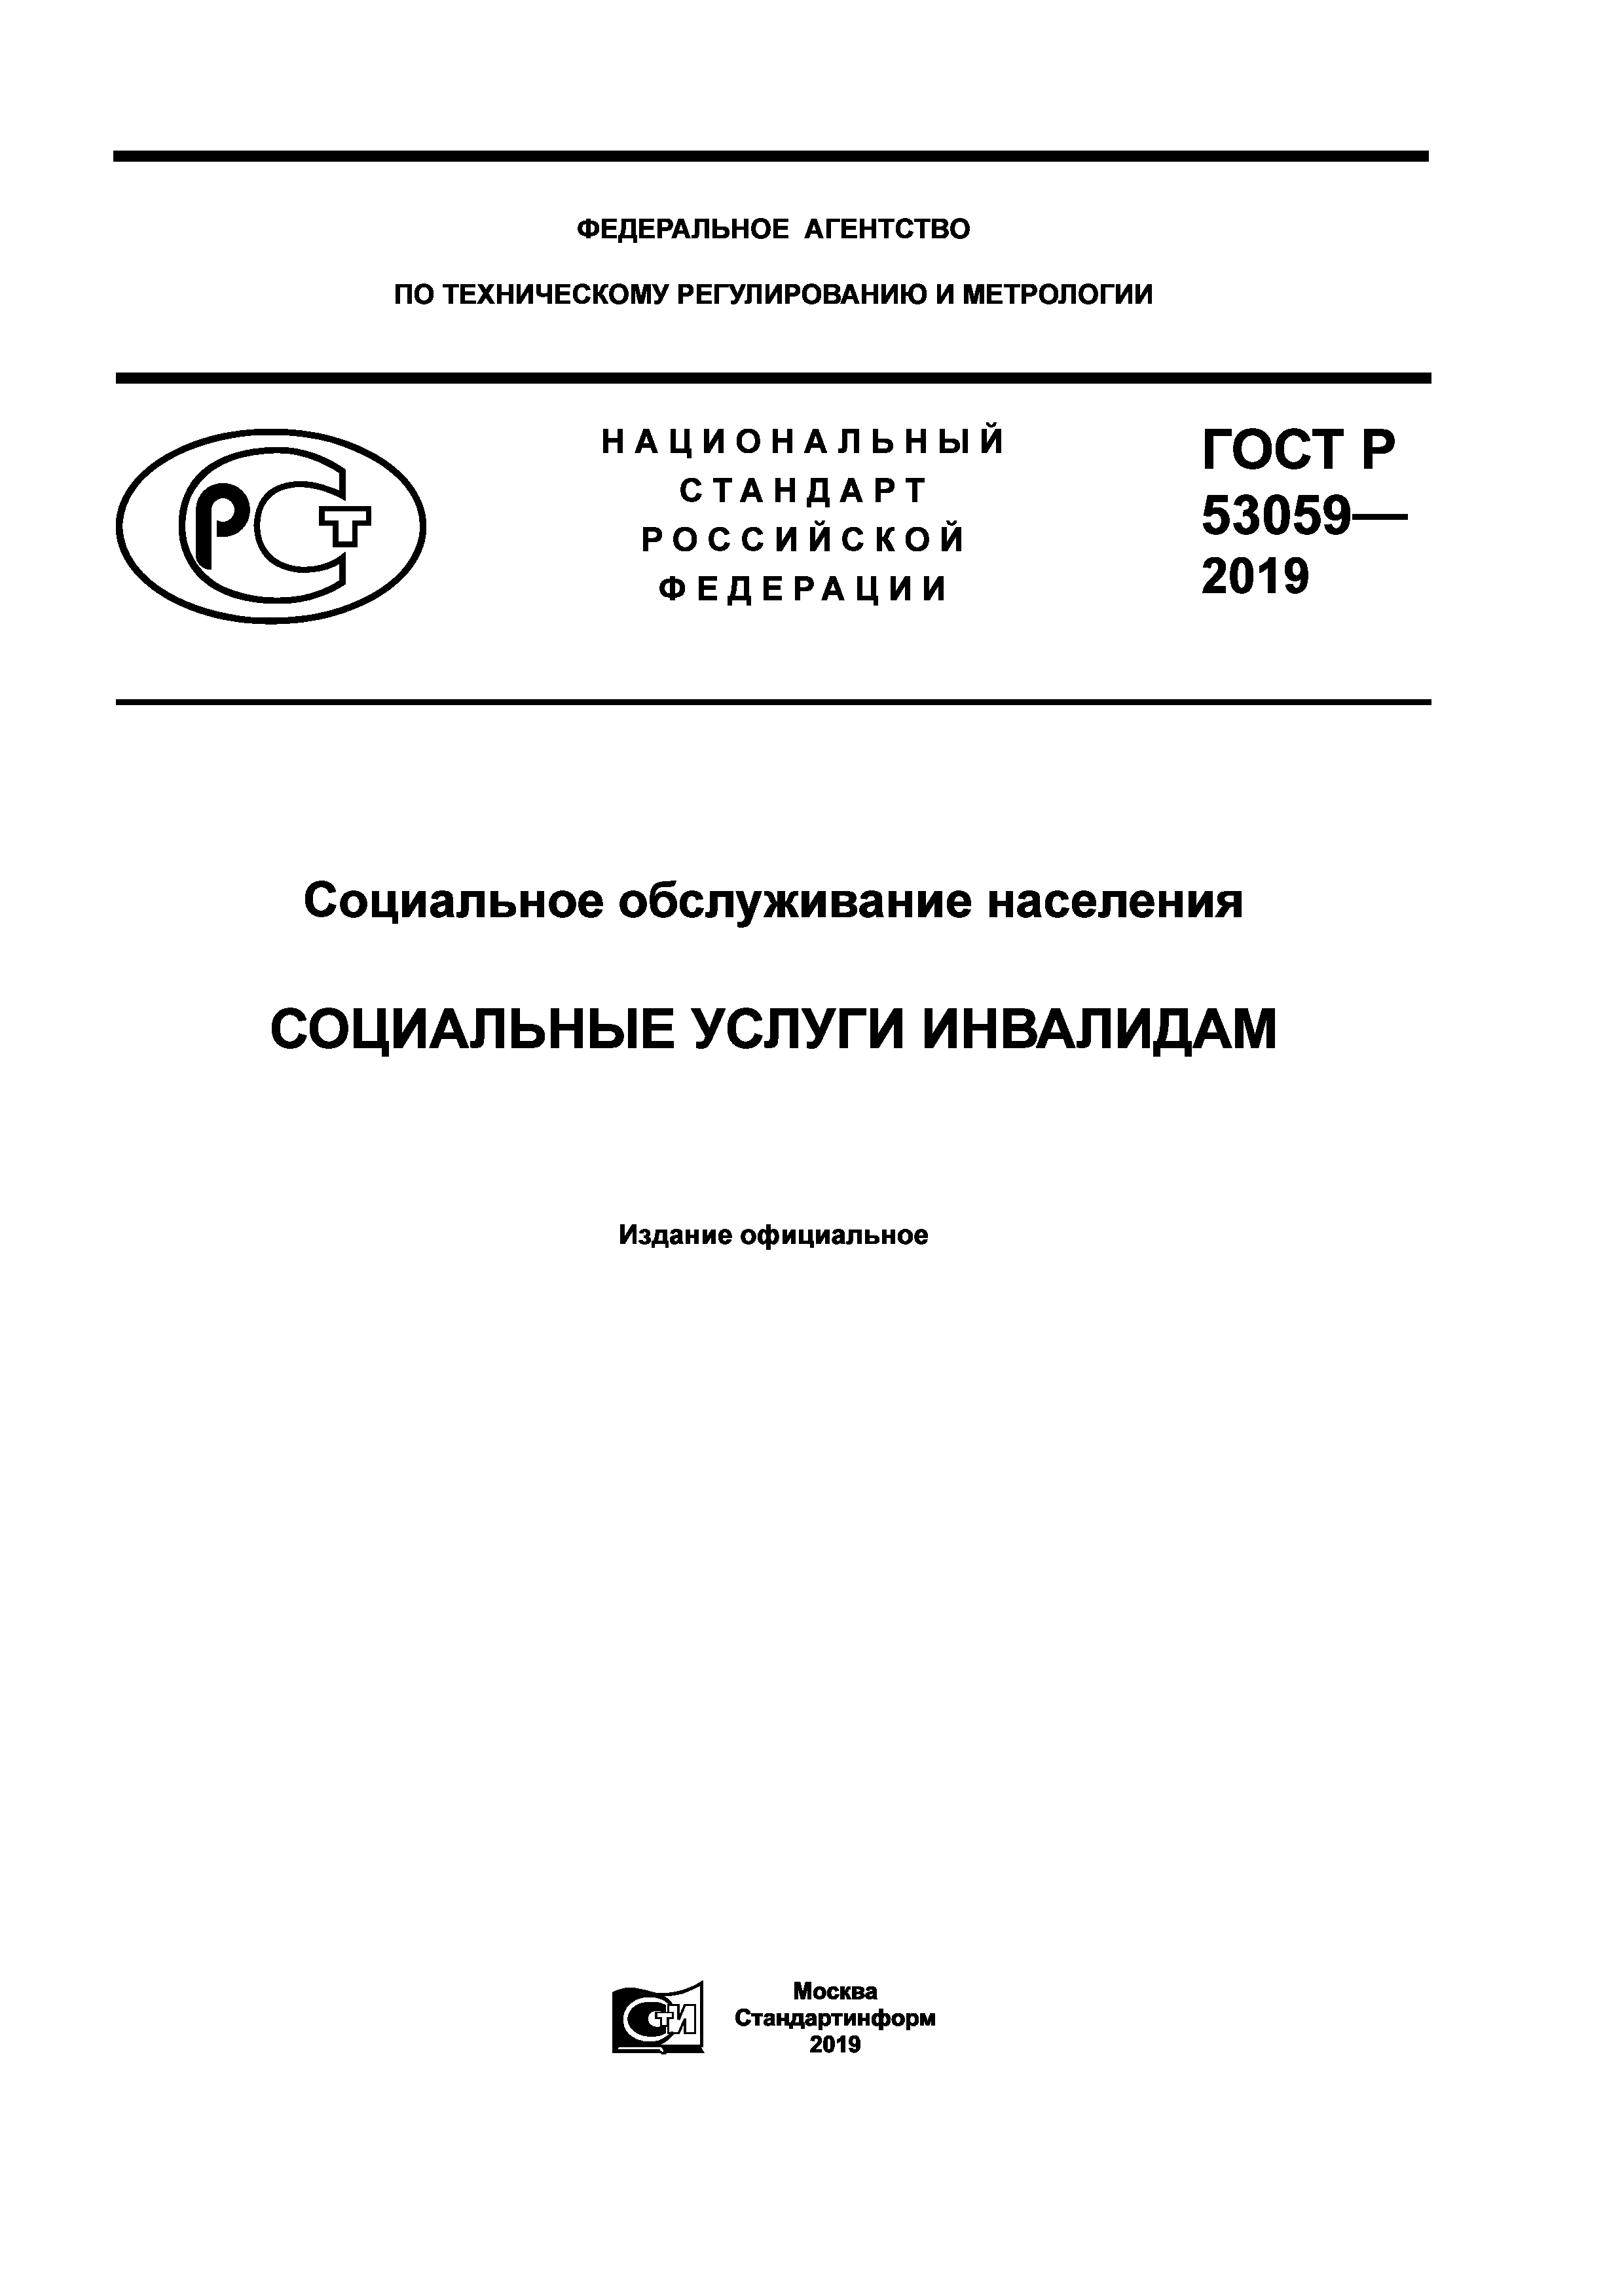 ГОСТ Р 53059-2019